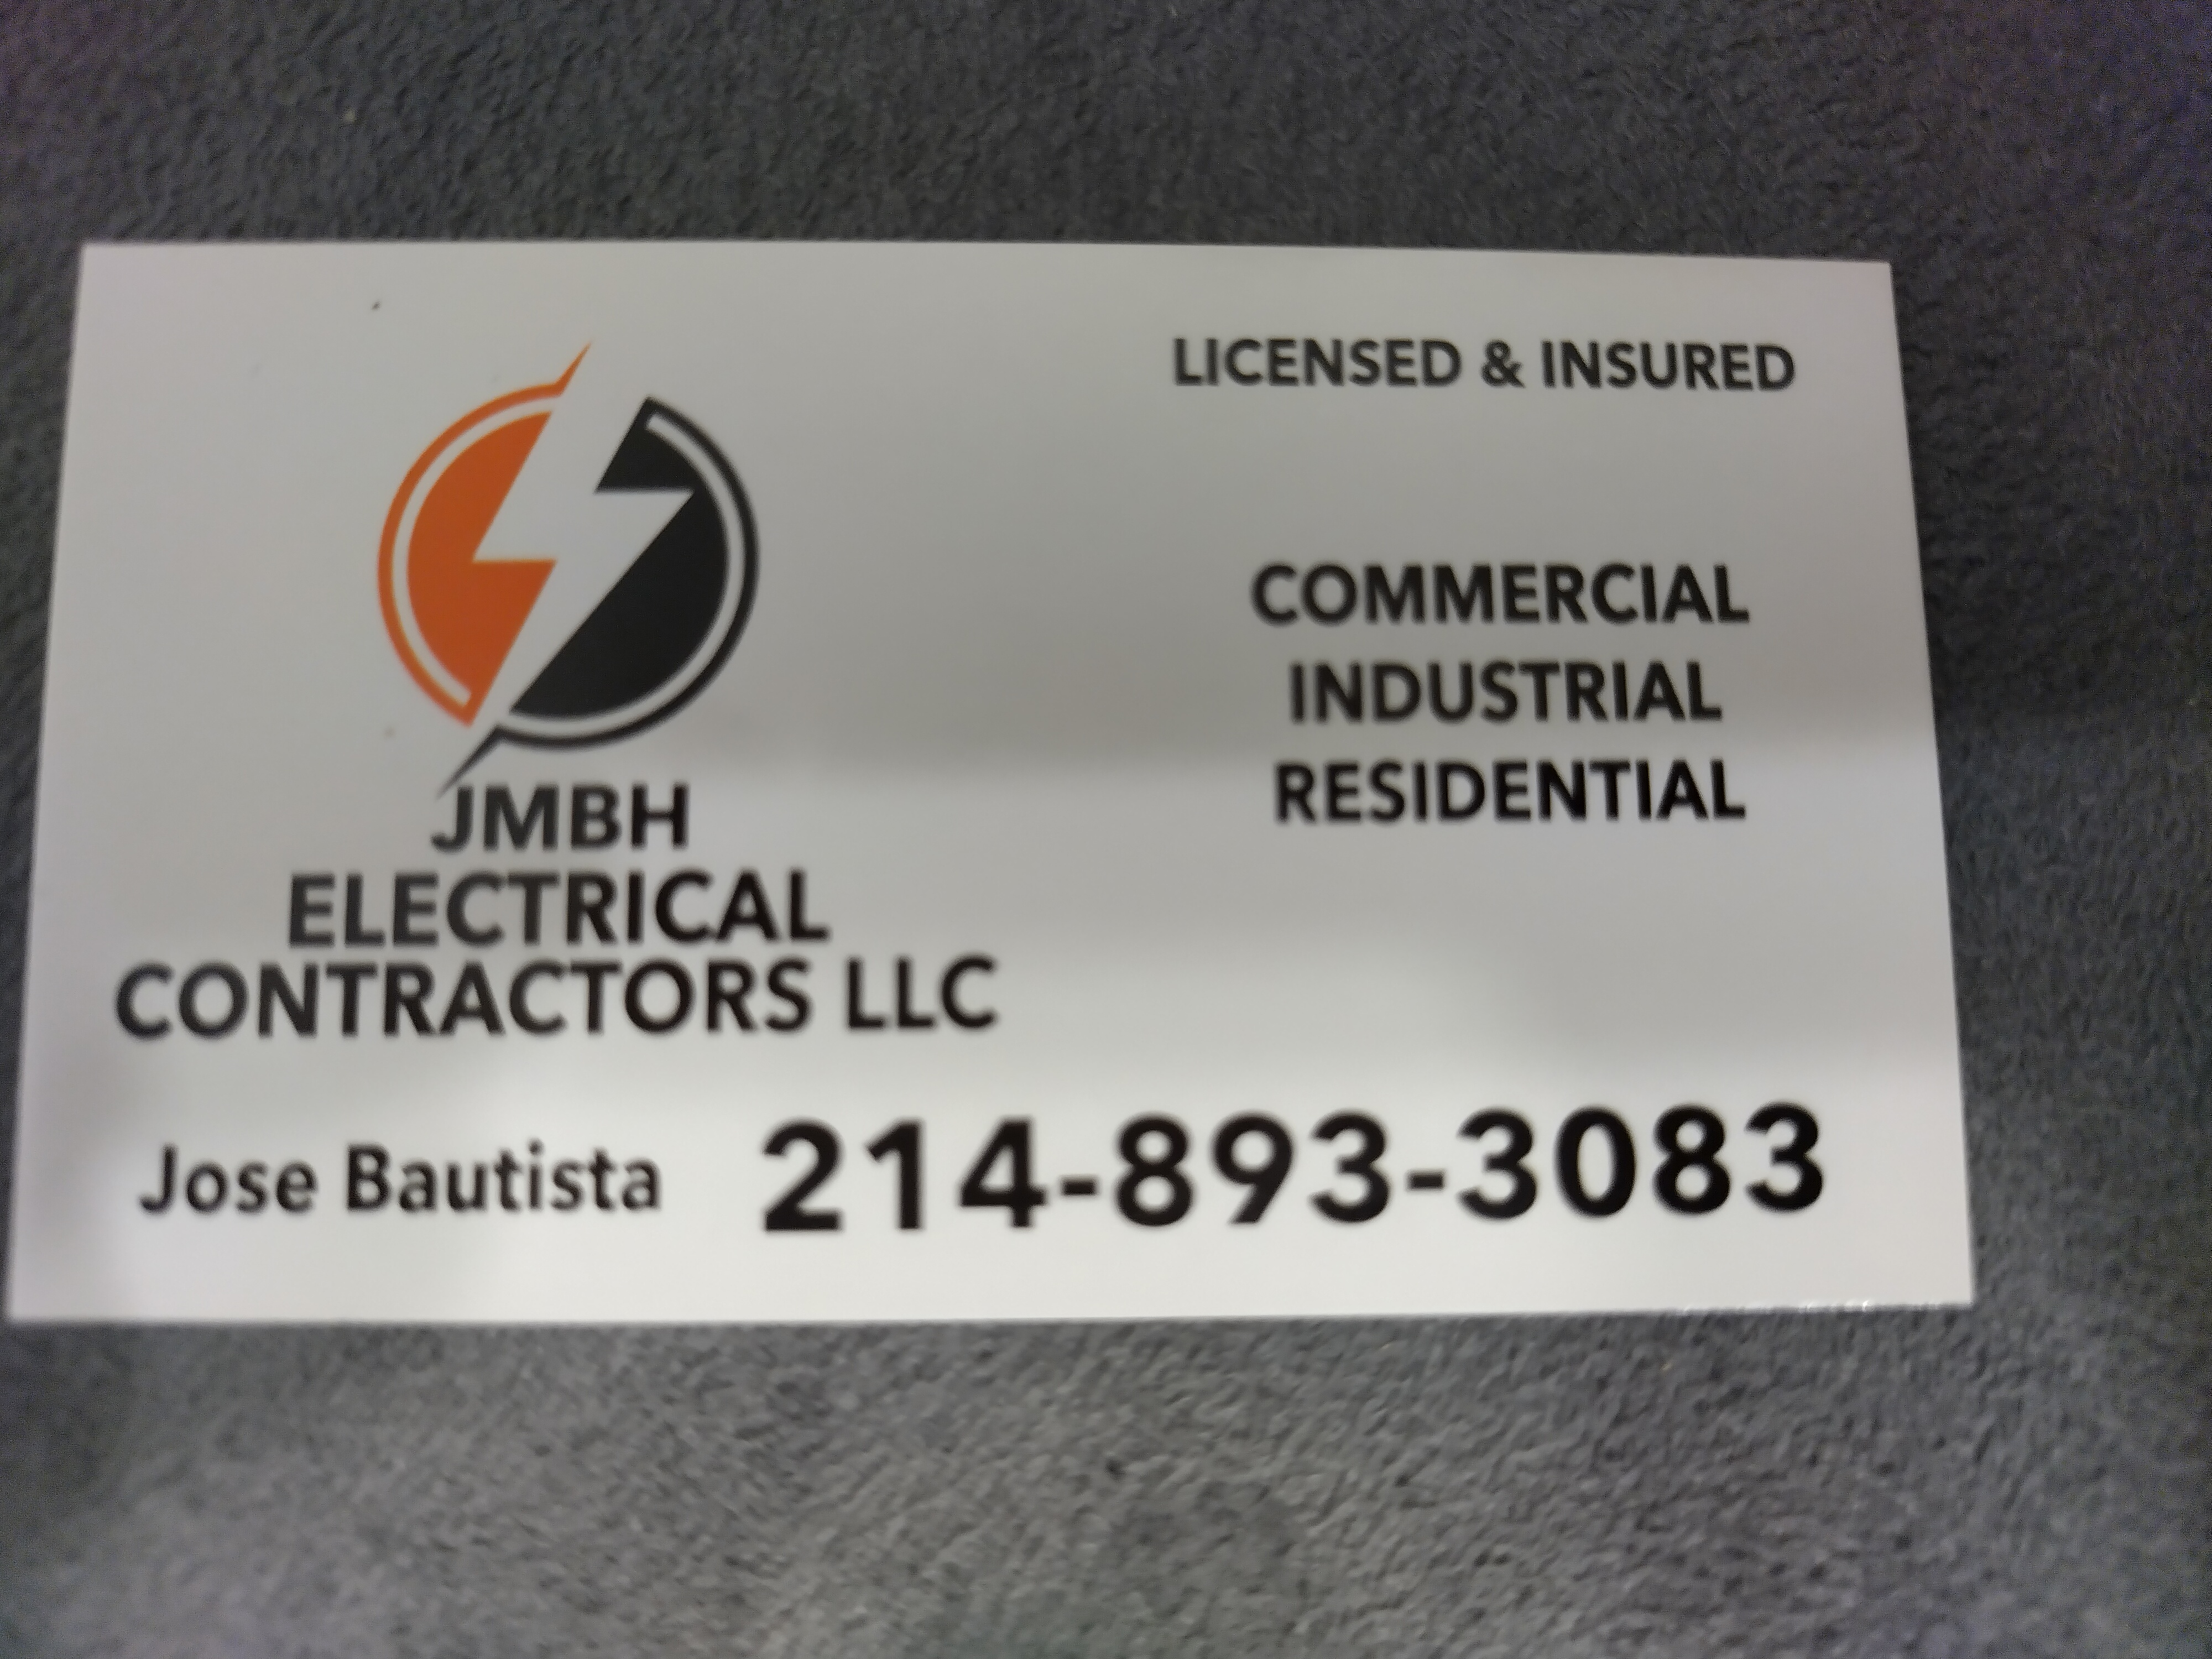 JMBH Electrical Contractors Logo